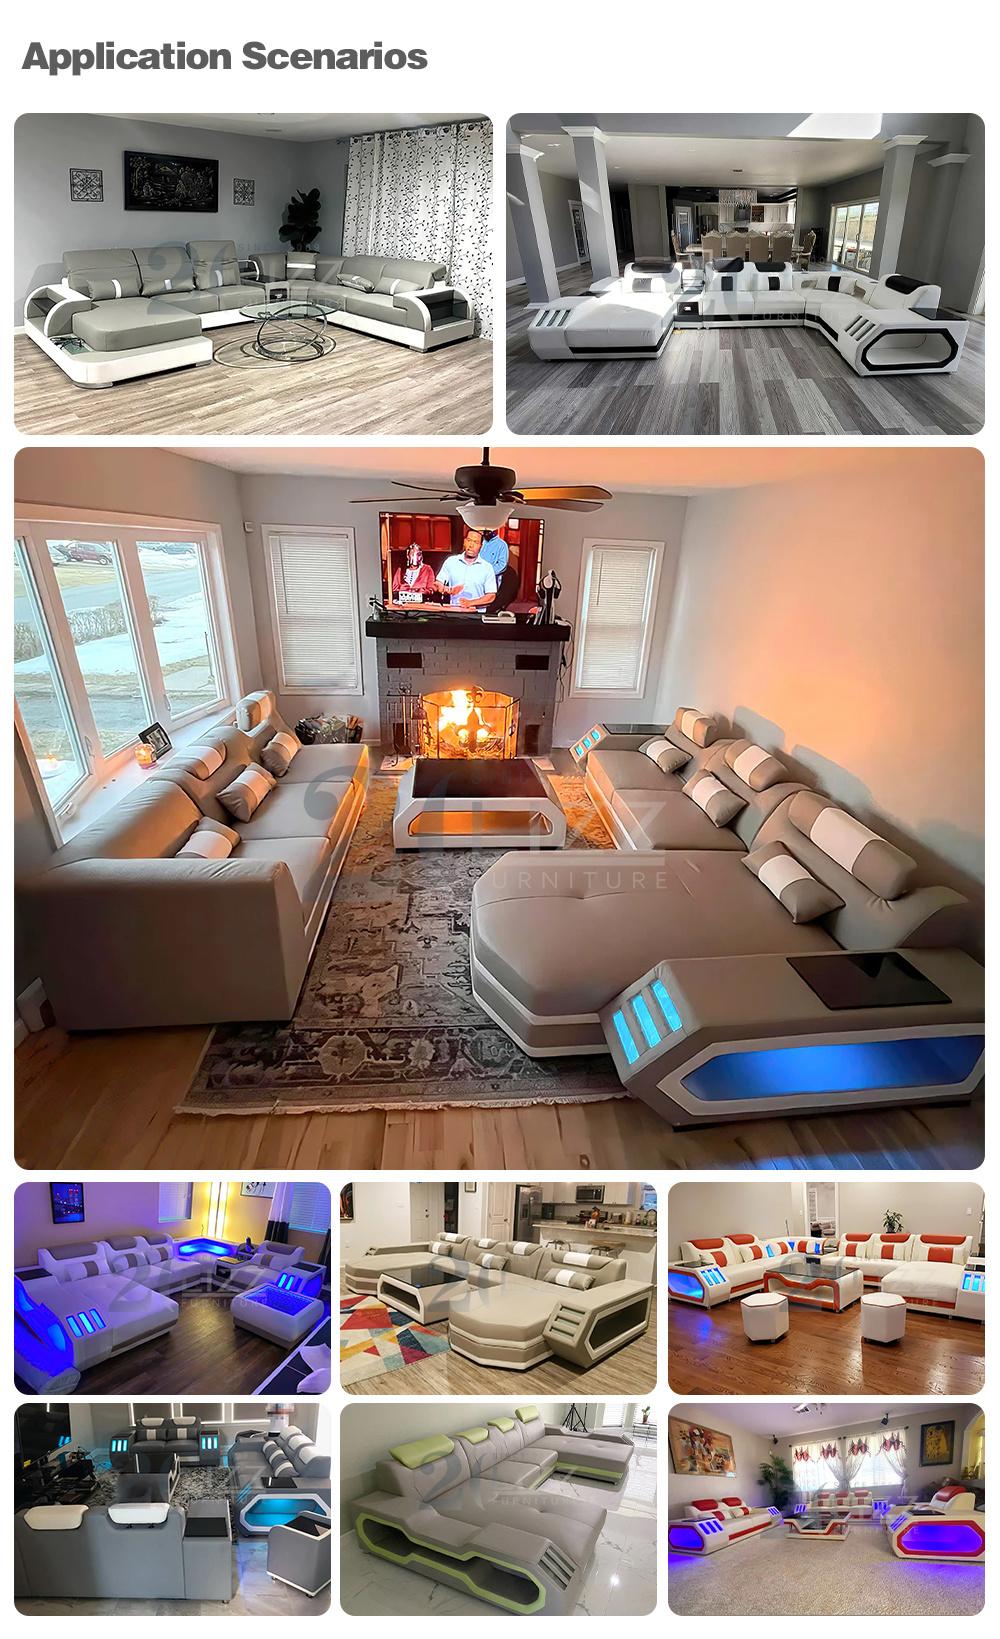 Modern Home Living Room Furniture Italian Natuzzi Style Genuine Leather Lounge Sectional Leisure LED Sofa